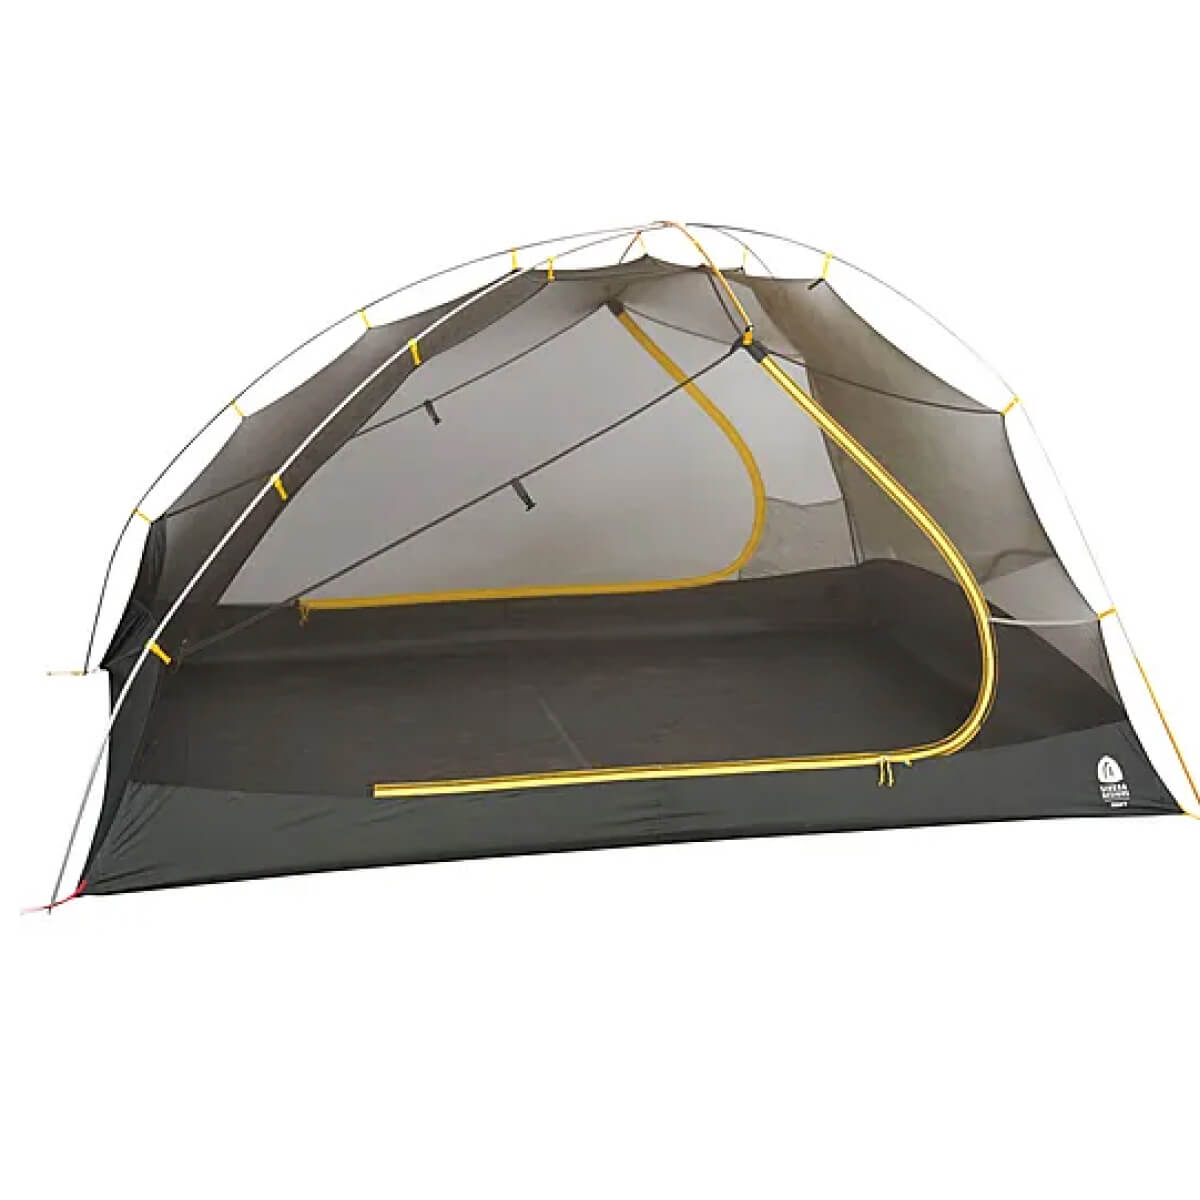 Sierra Designs Meteor 4 person backpacking tent